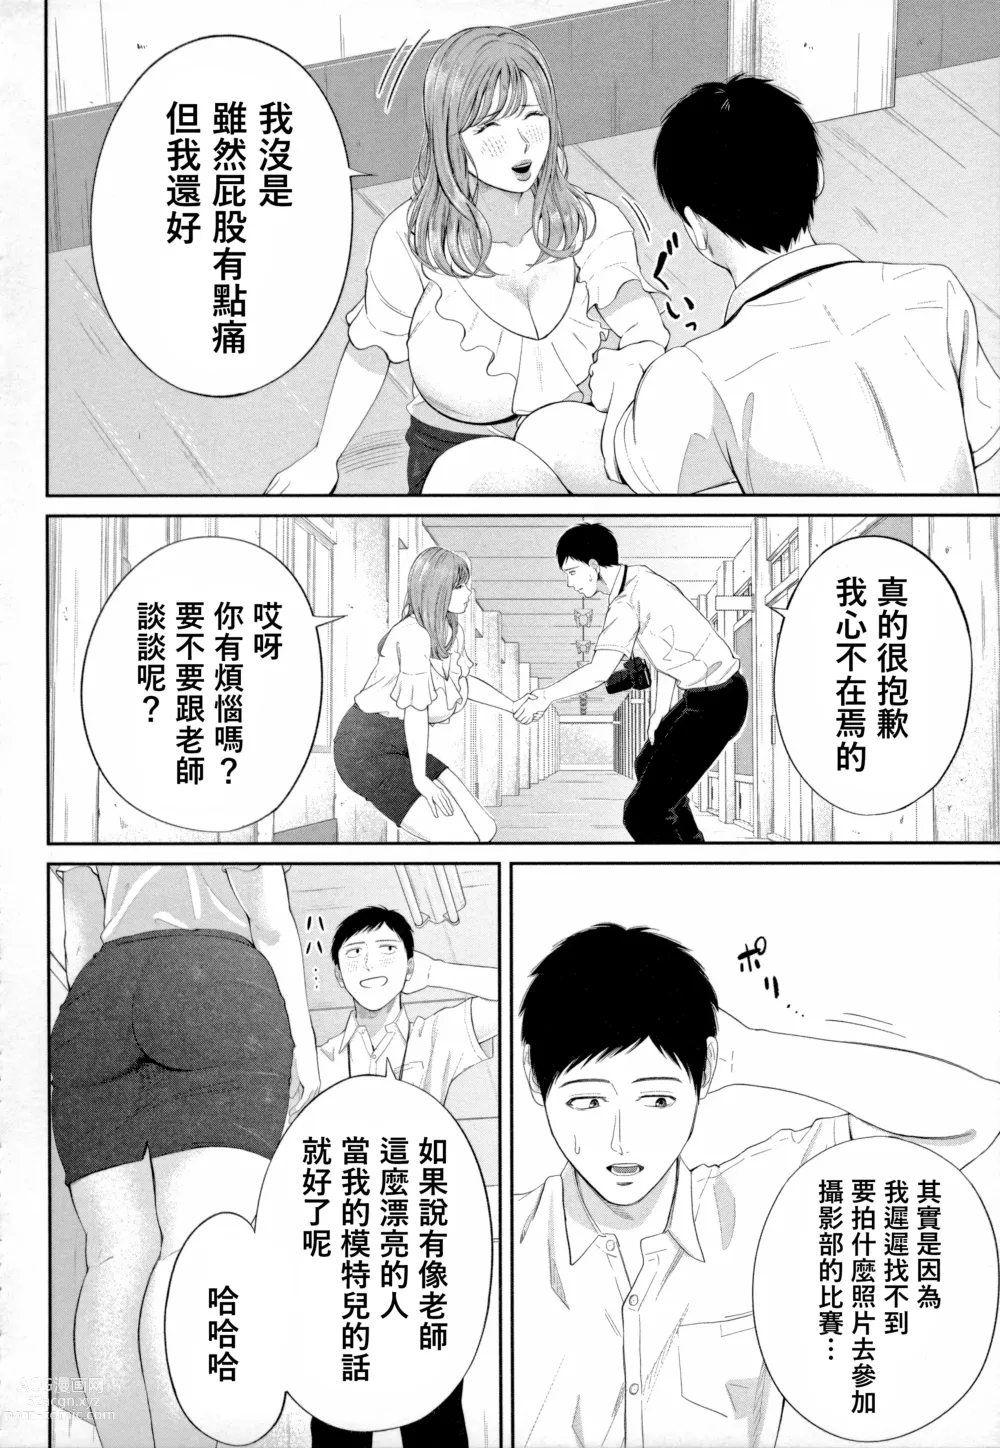 Page 6 of manga Senjou no Misshitsu